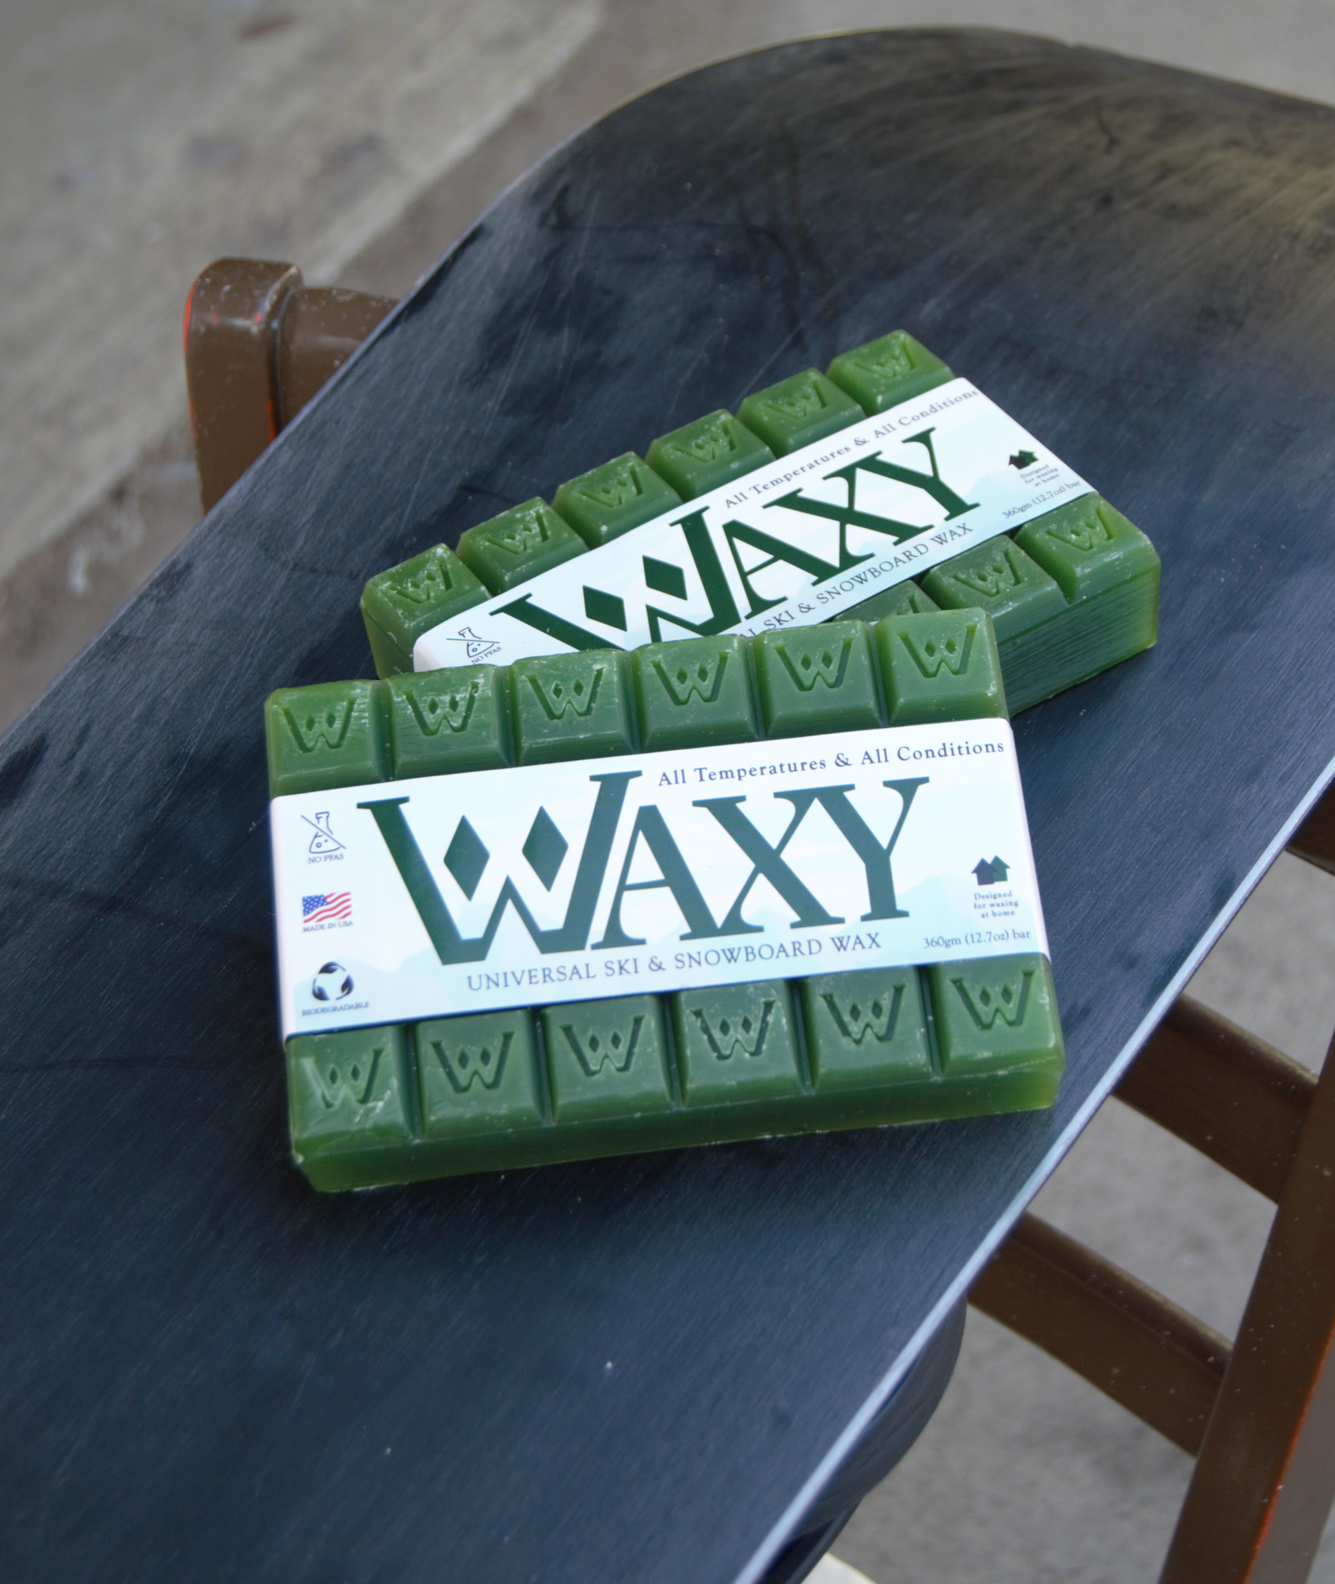 Waxy Universal Ski & Snowboard Wax